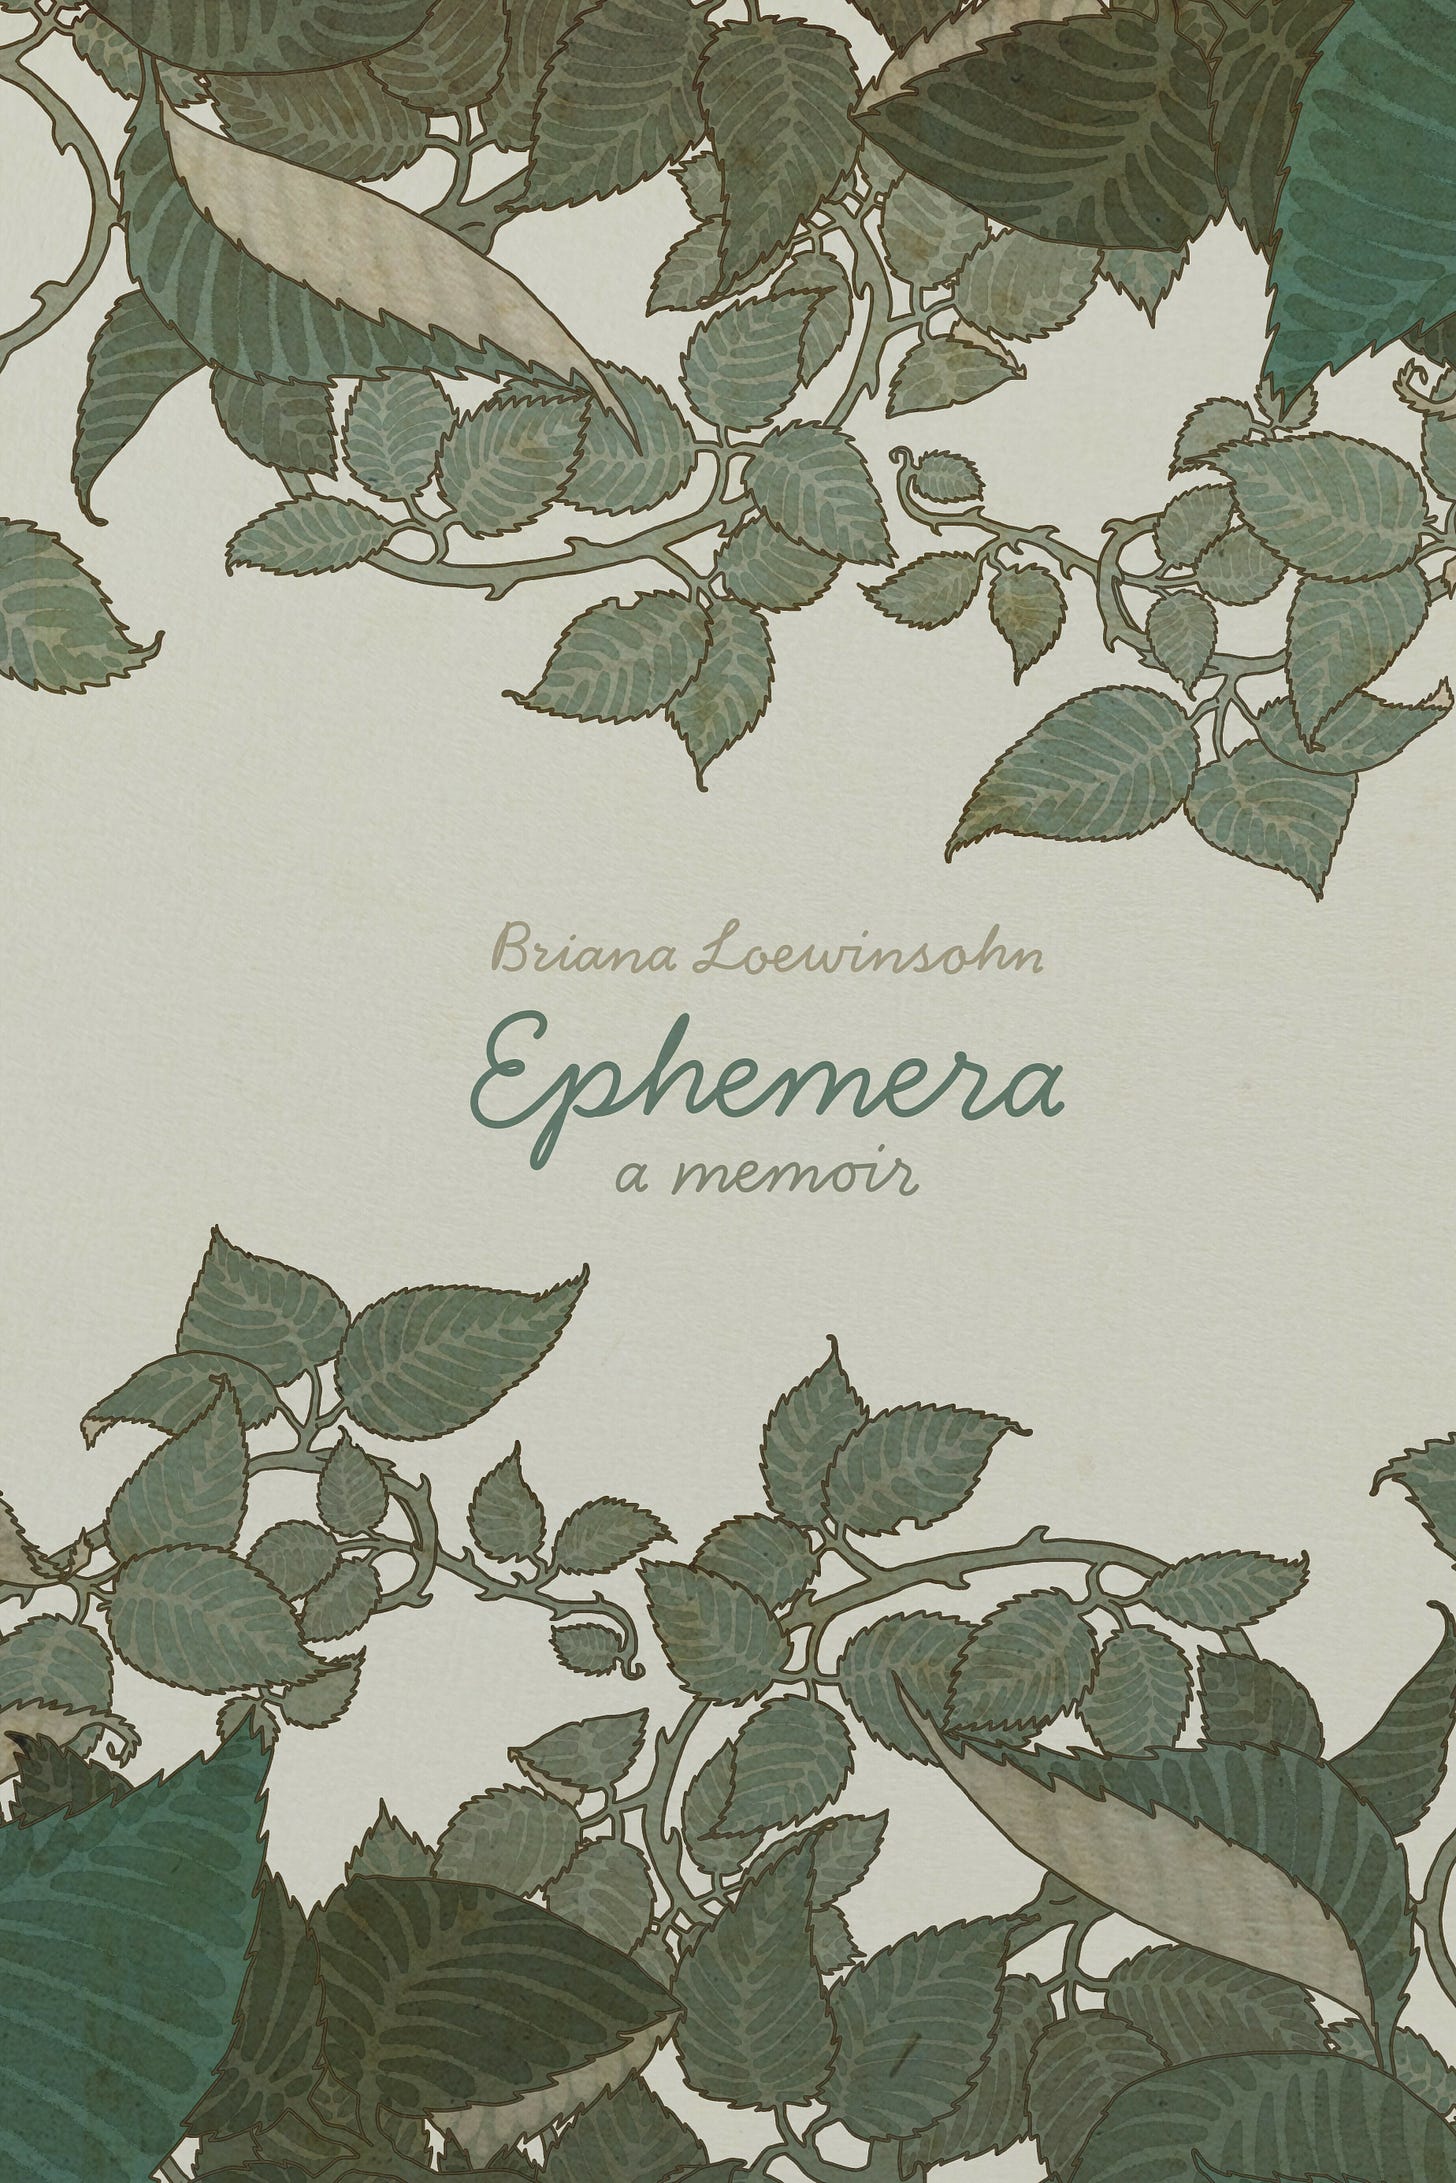 Ephemera: A Memoir by Briana Loewinsohn | Goodreads